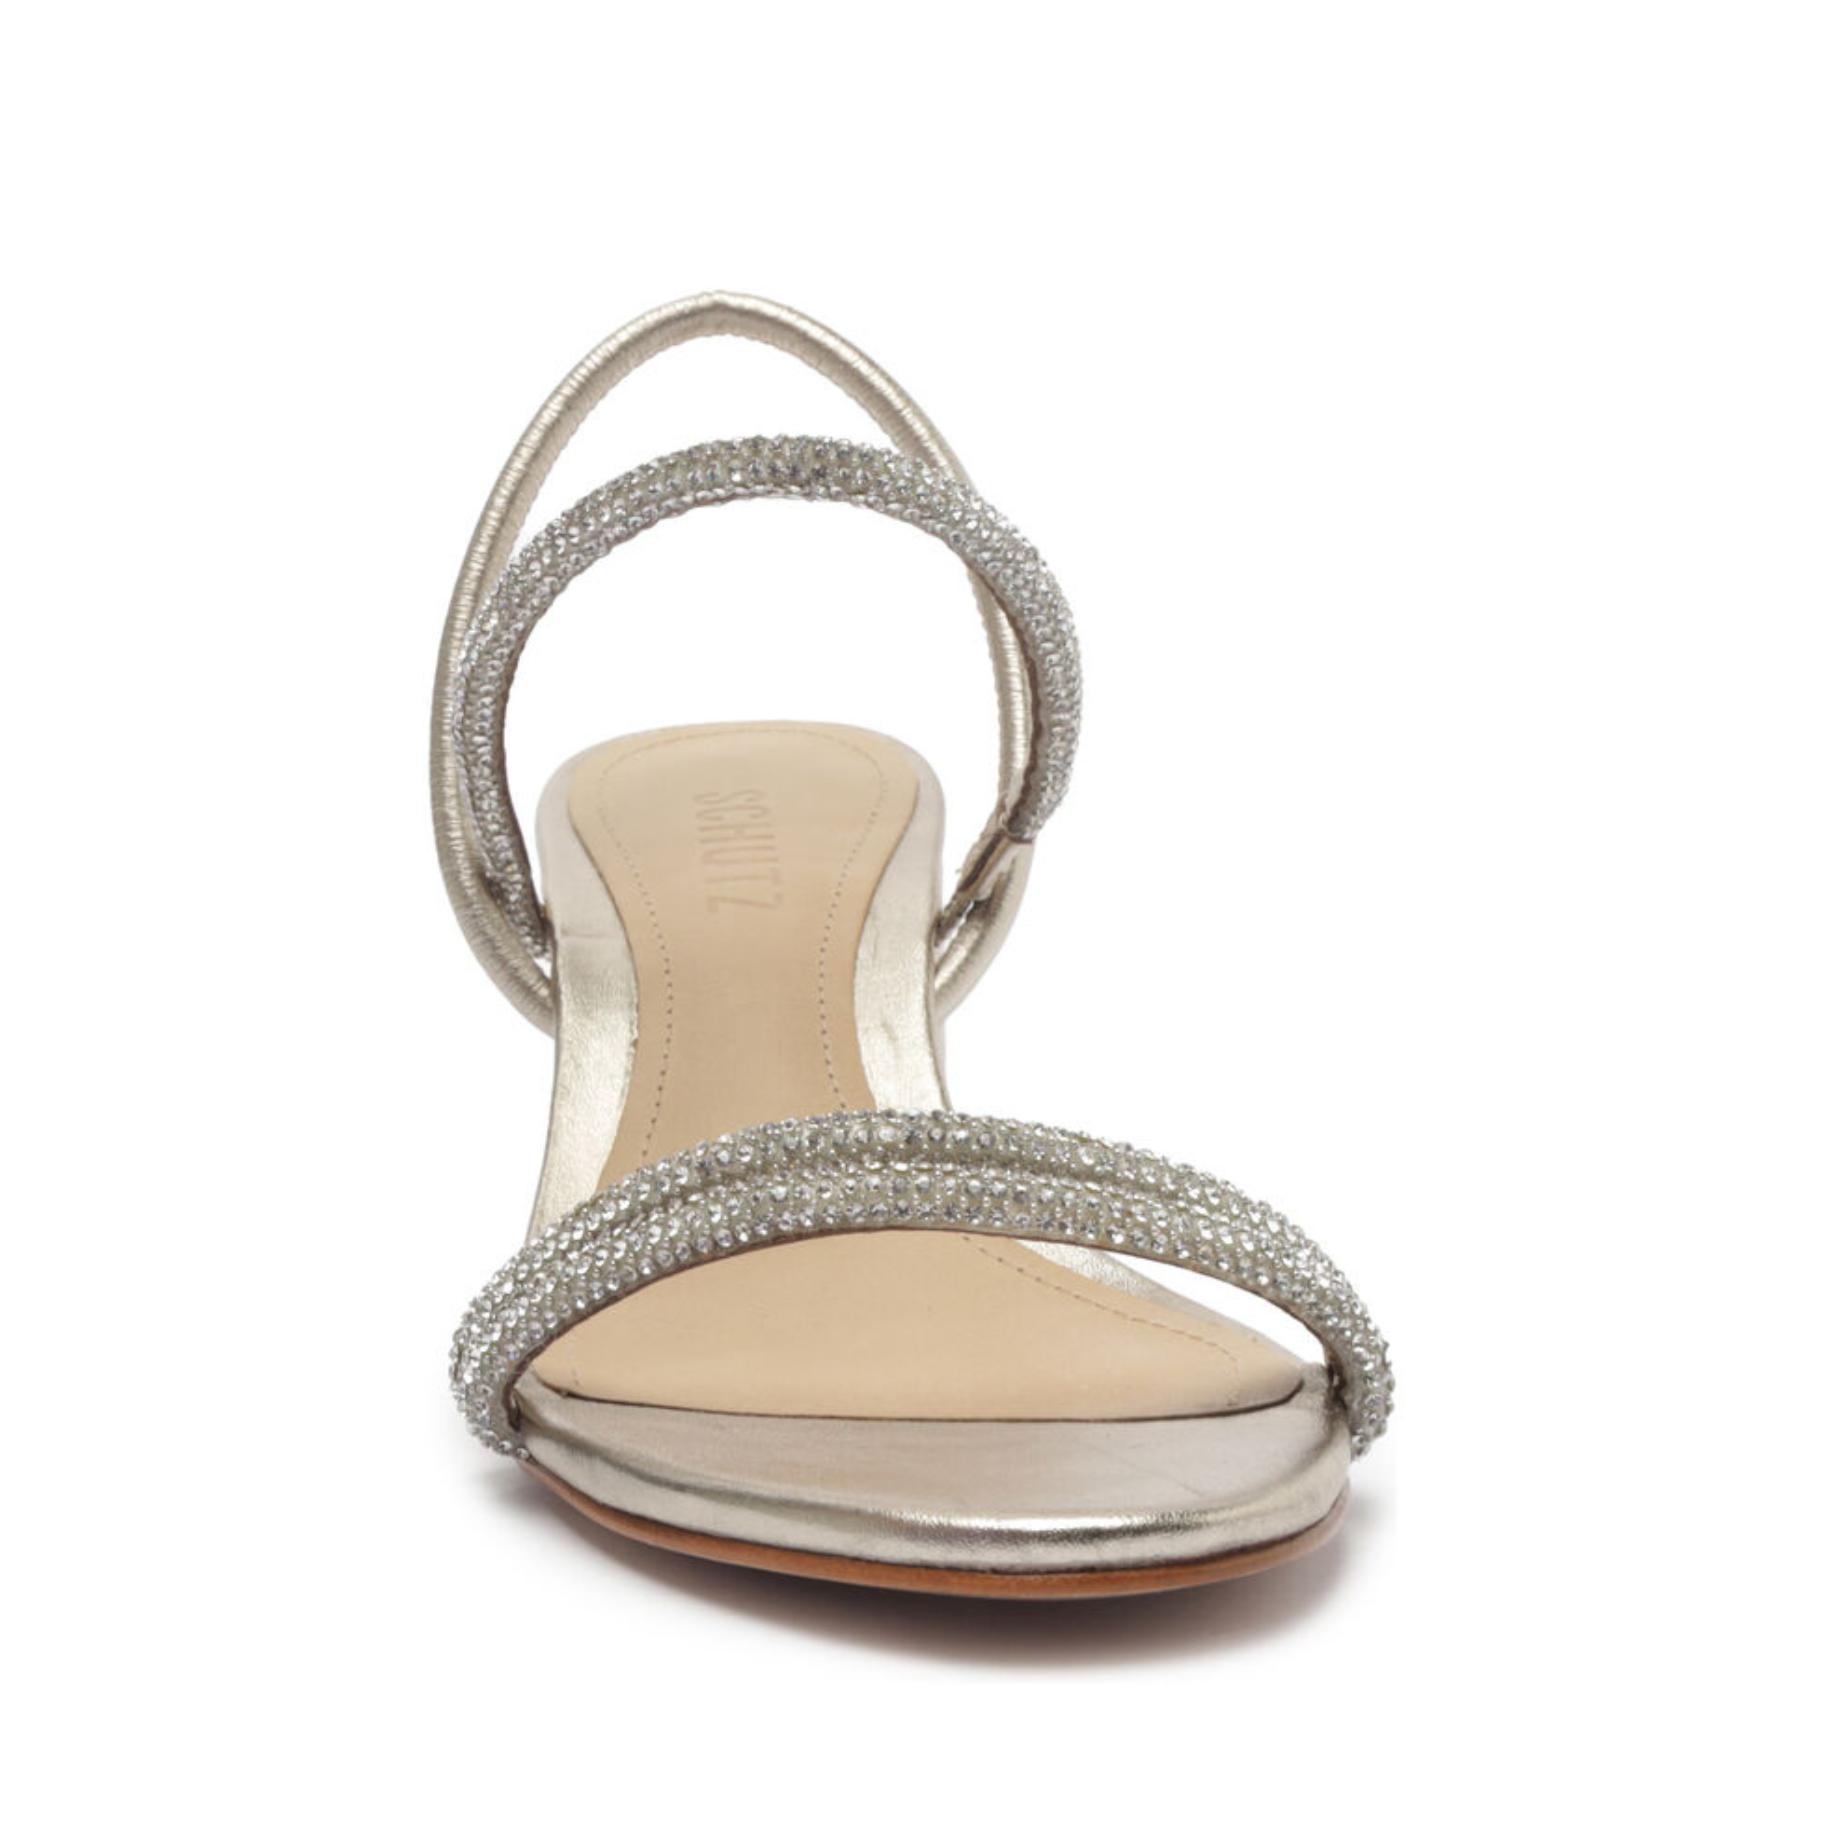 Schutz Whiteley Block Heel Sandal Product Image